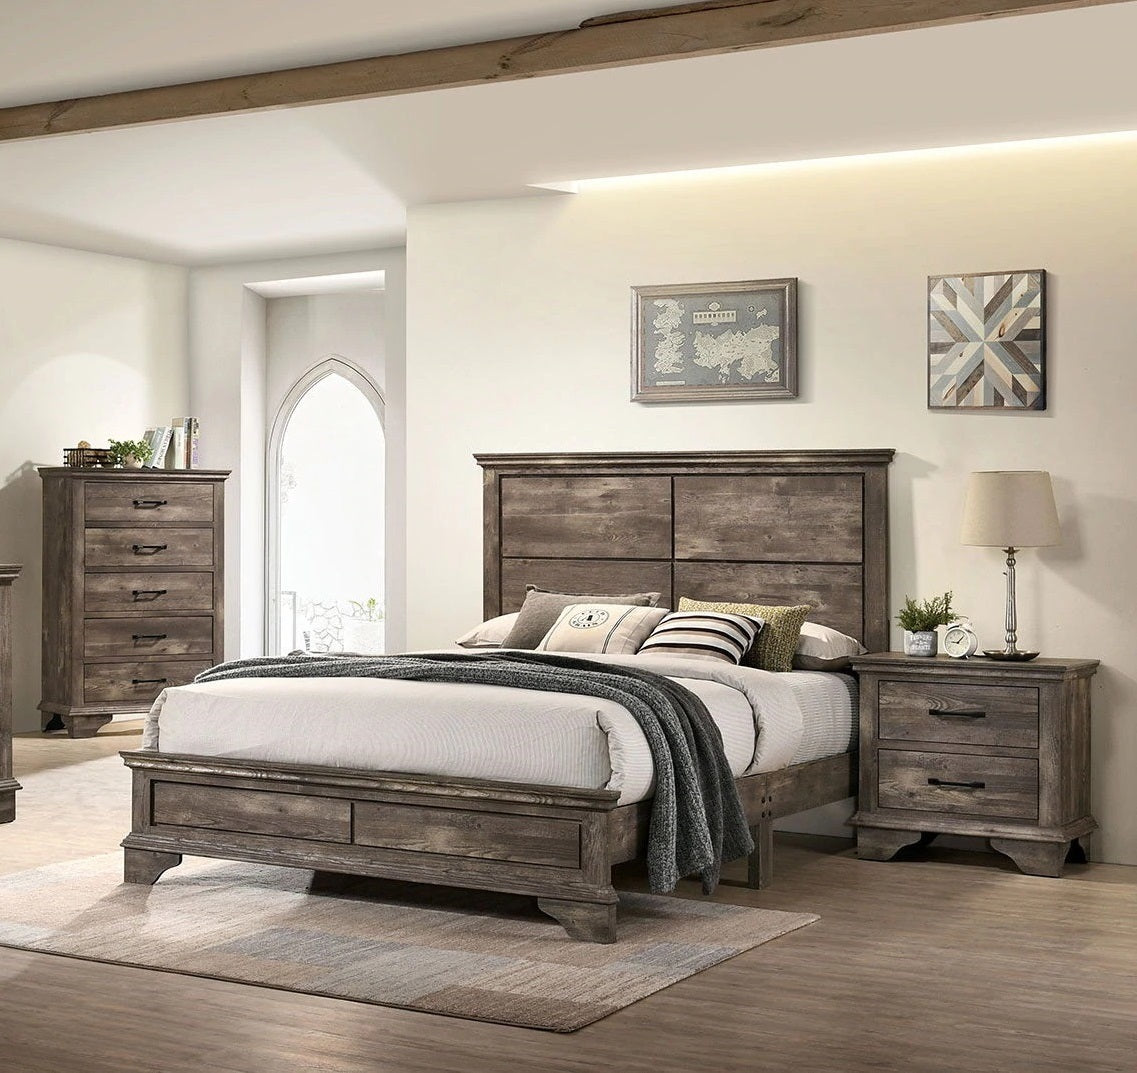 Solid Wood Veneer Matte Black Bar Pulls Replicated Wood Grain Bedroom